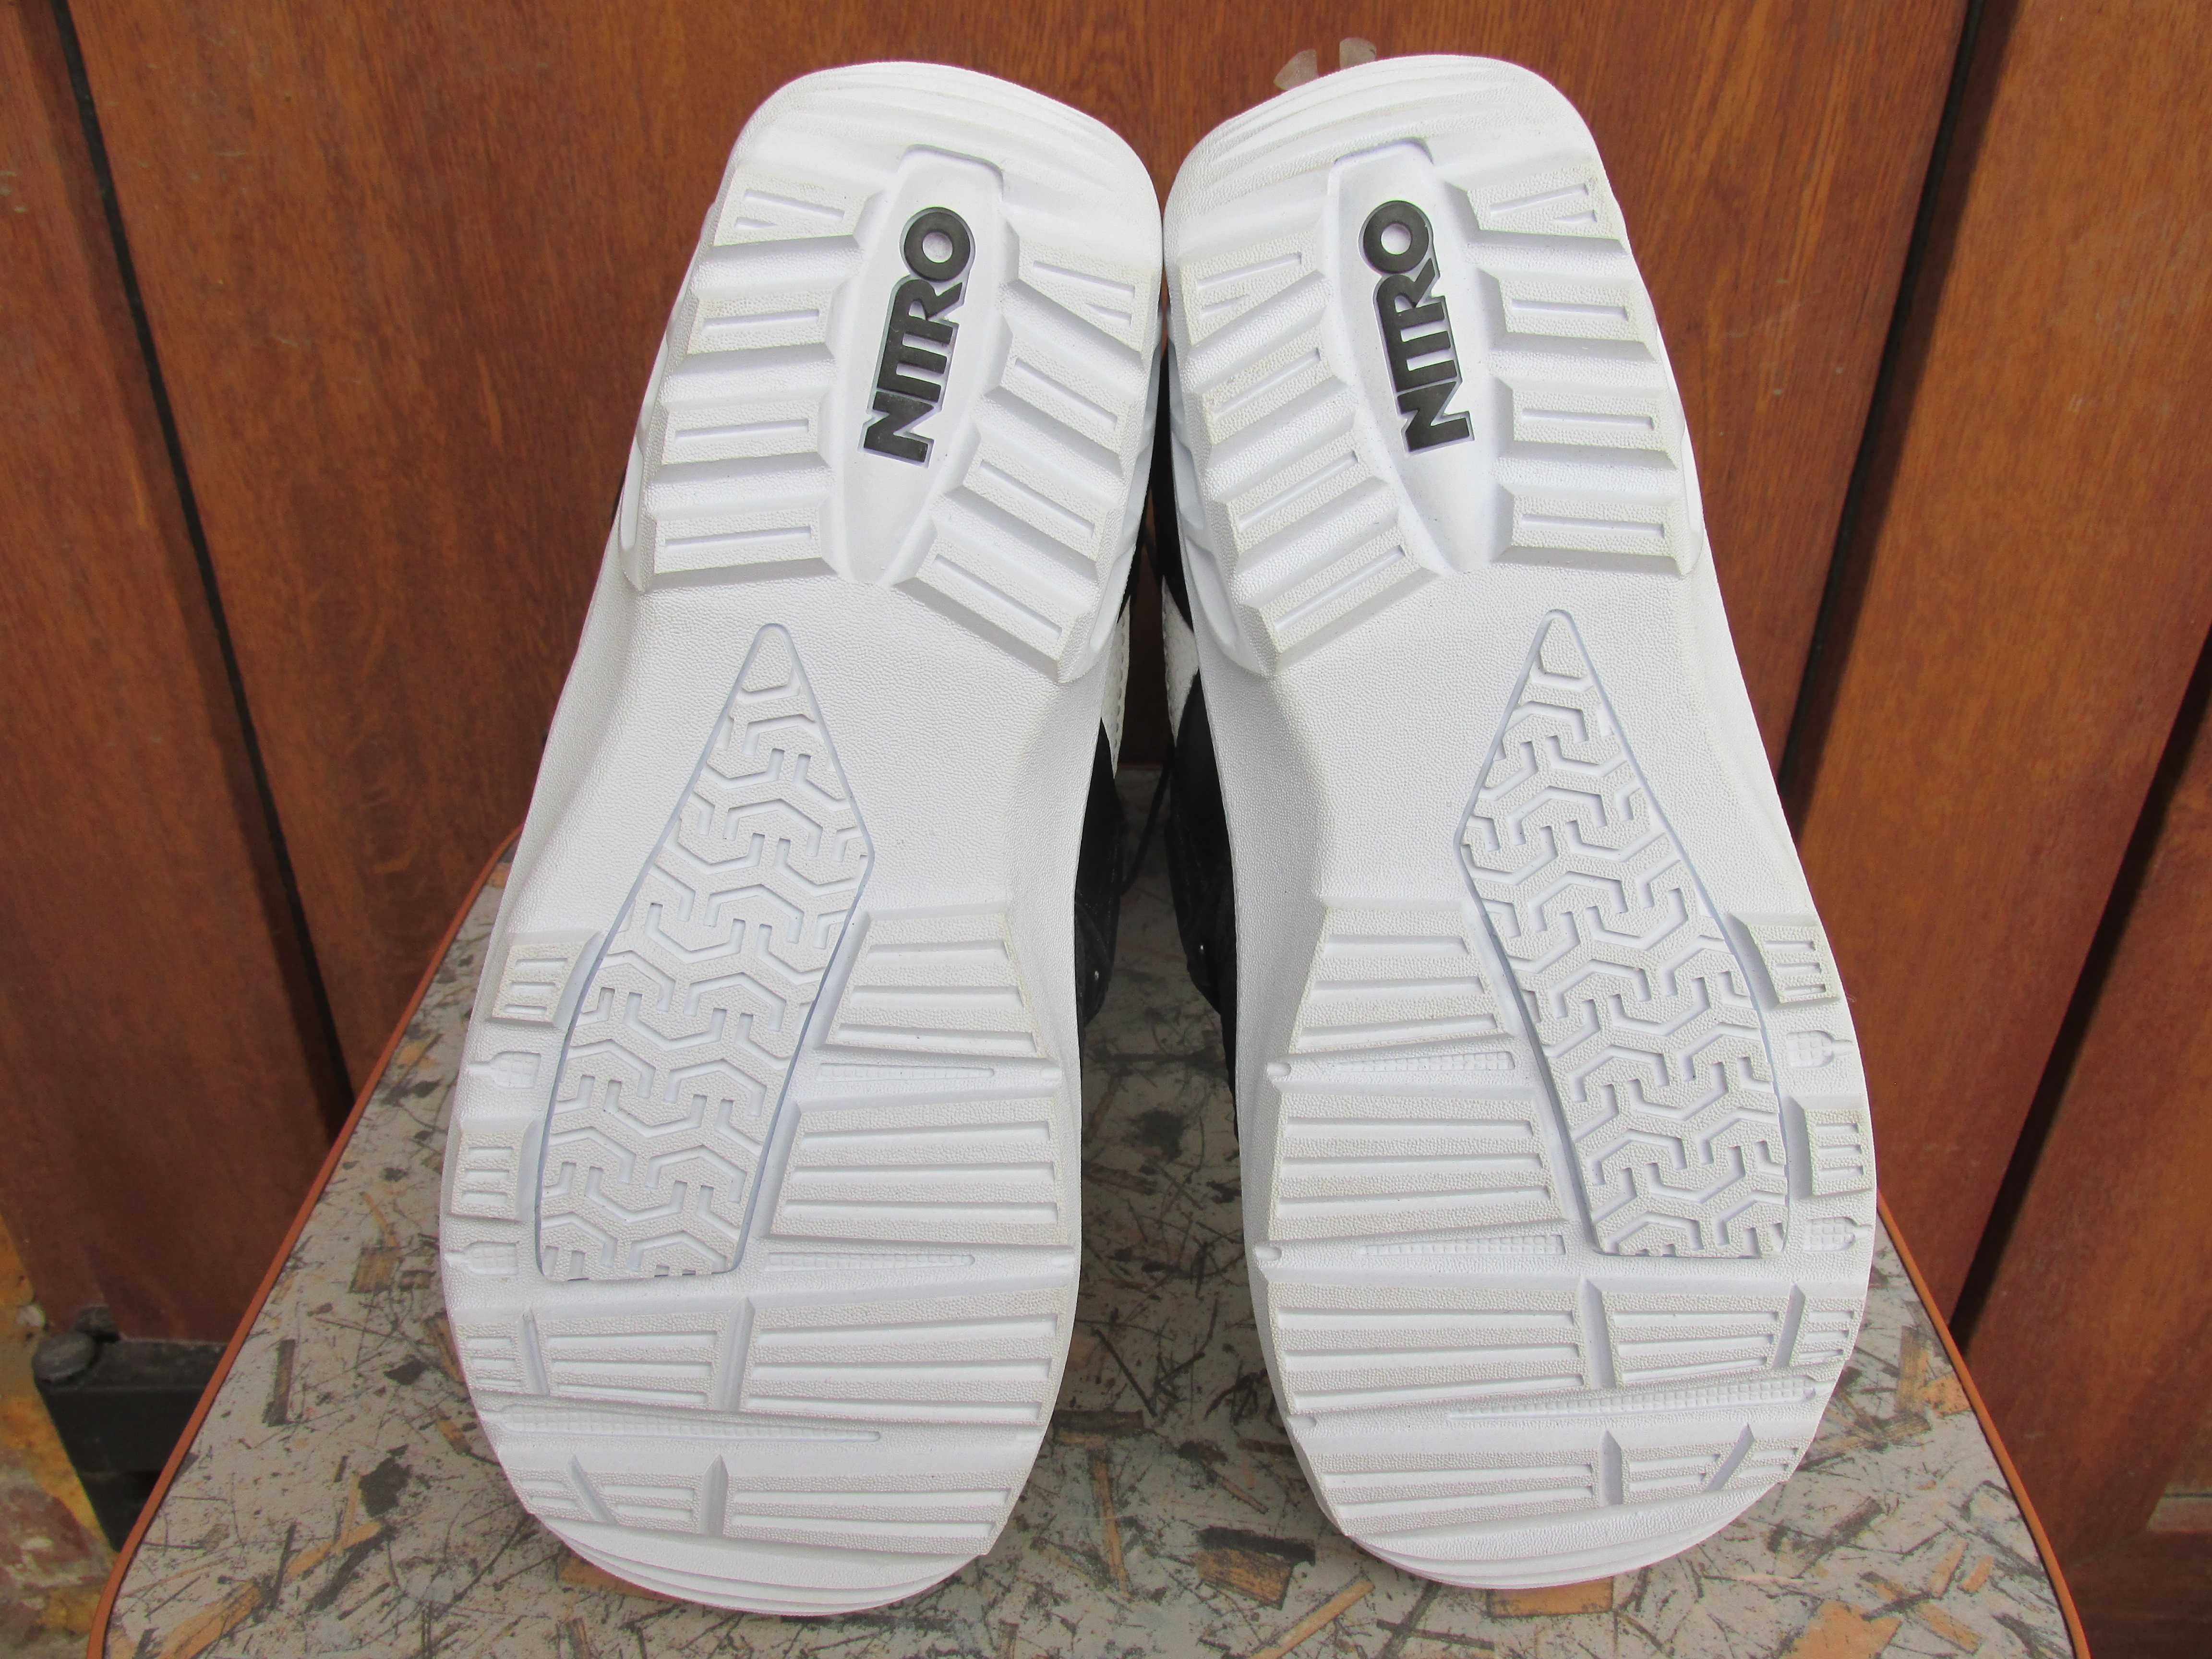 Ботинки для сноуборда NITRO 36,5-37 размер